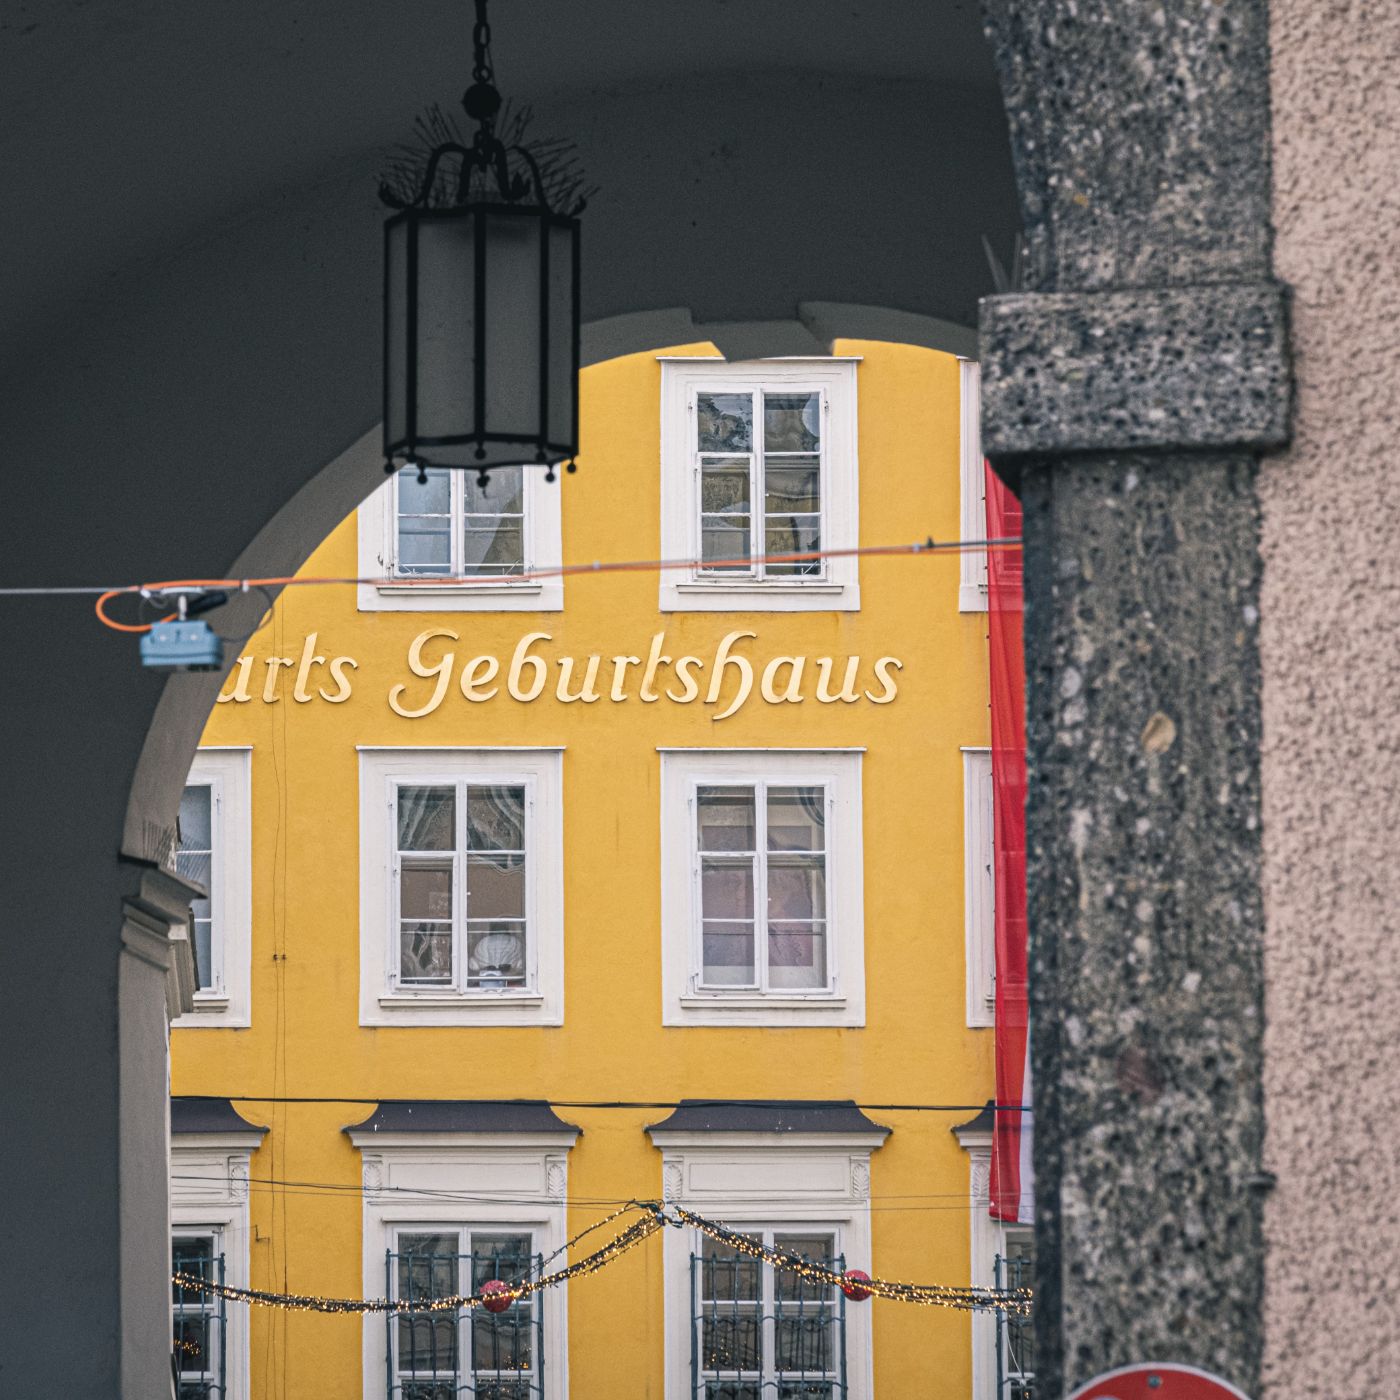 Photo by Free Walking Tour Salzburg on Unsplash